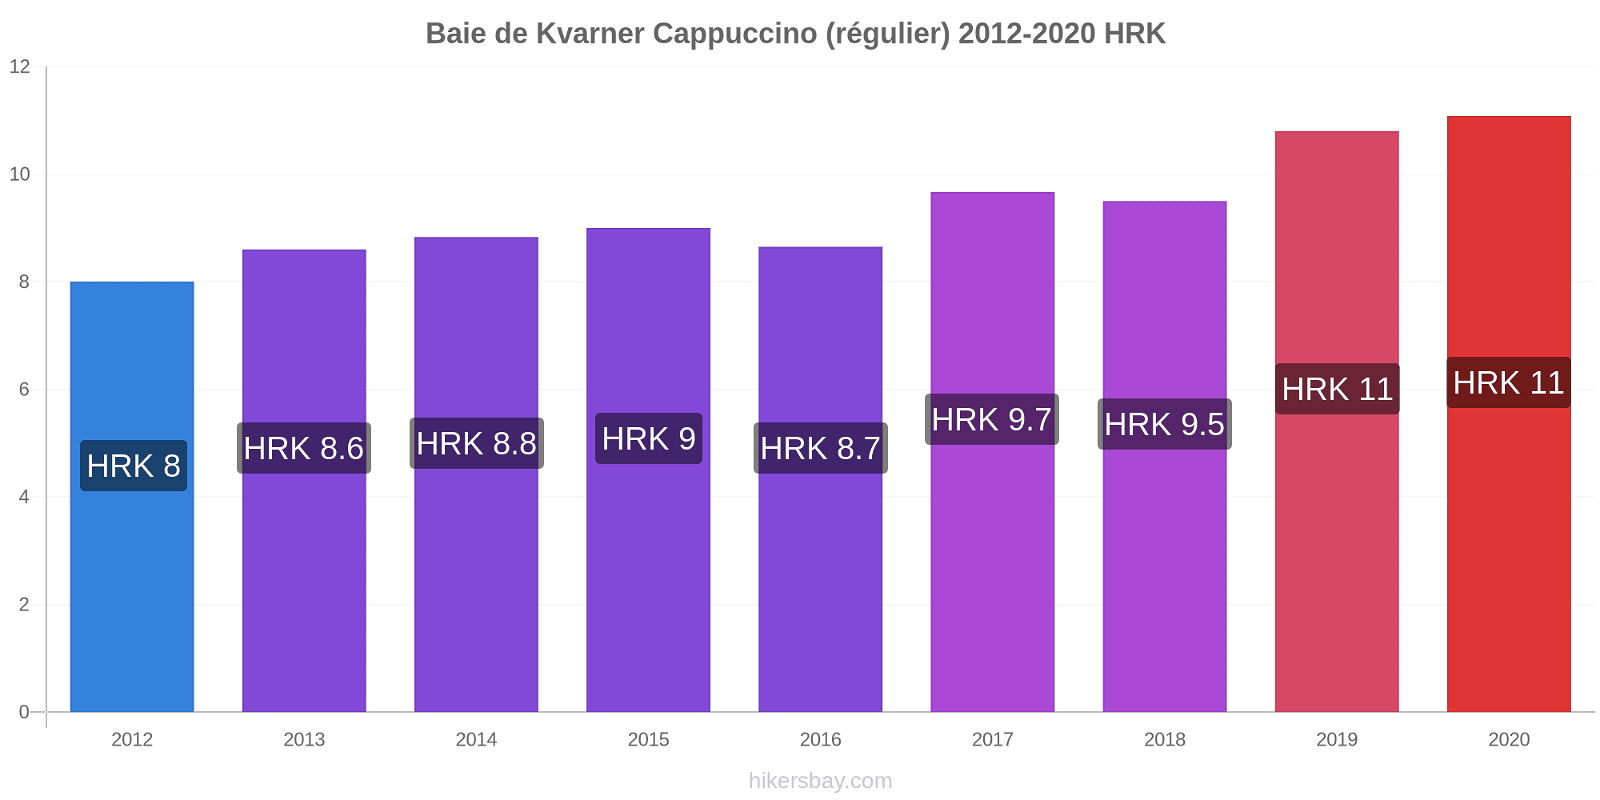 Baie de Kvarner changements de prix Cappuccino (régulier) hikersbay.com